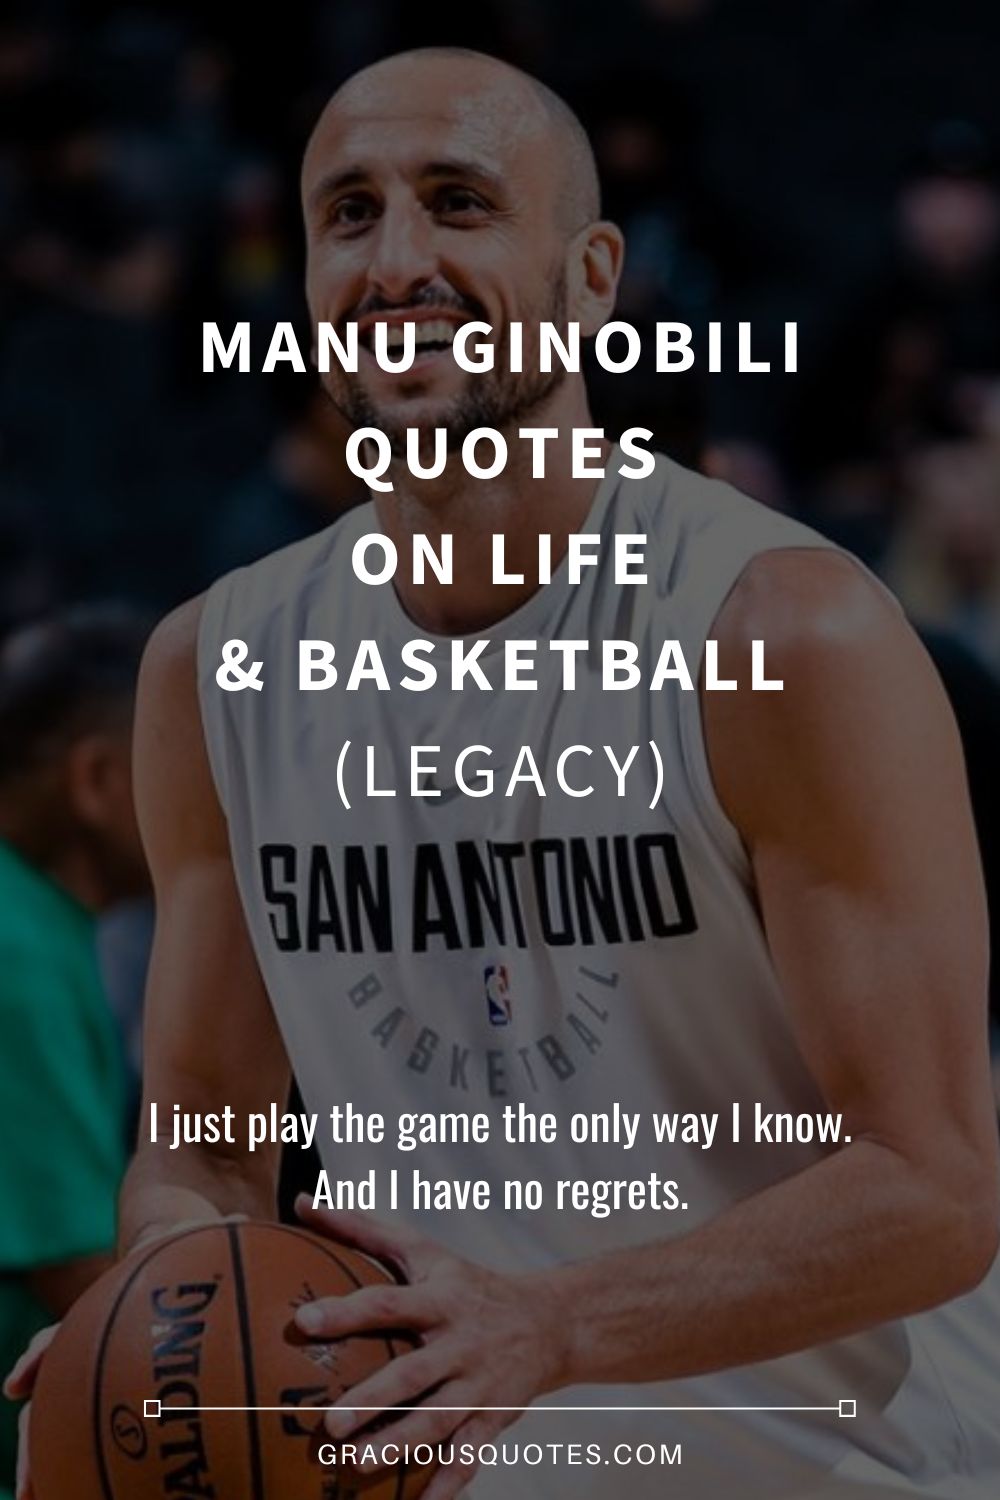 Manu Ginobili Quotes on Life & Basketball (LEGACY) - Gracious Quotes